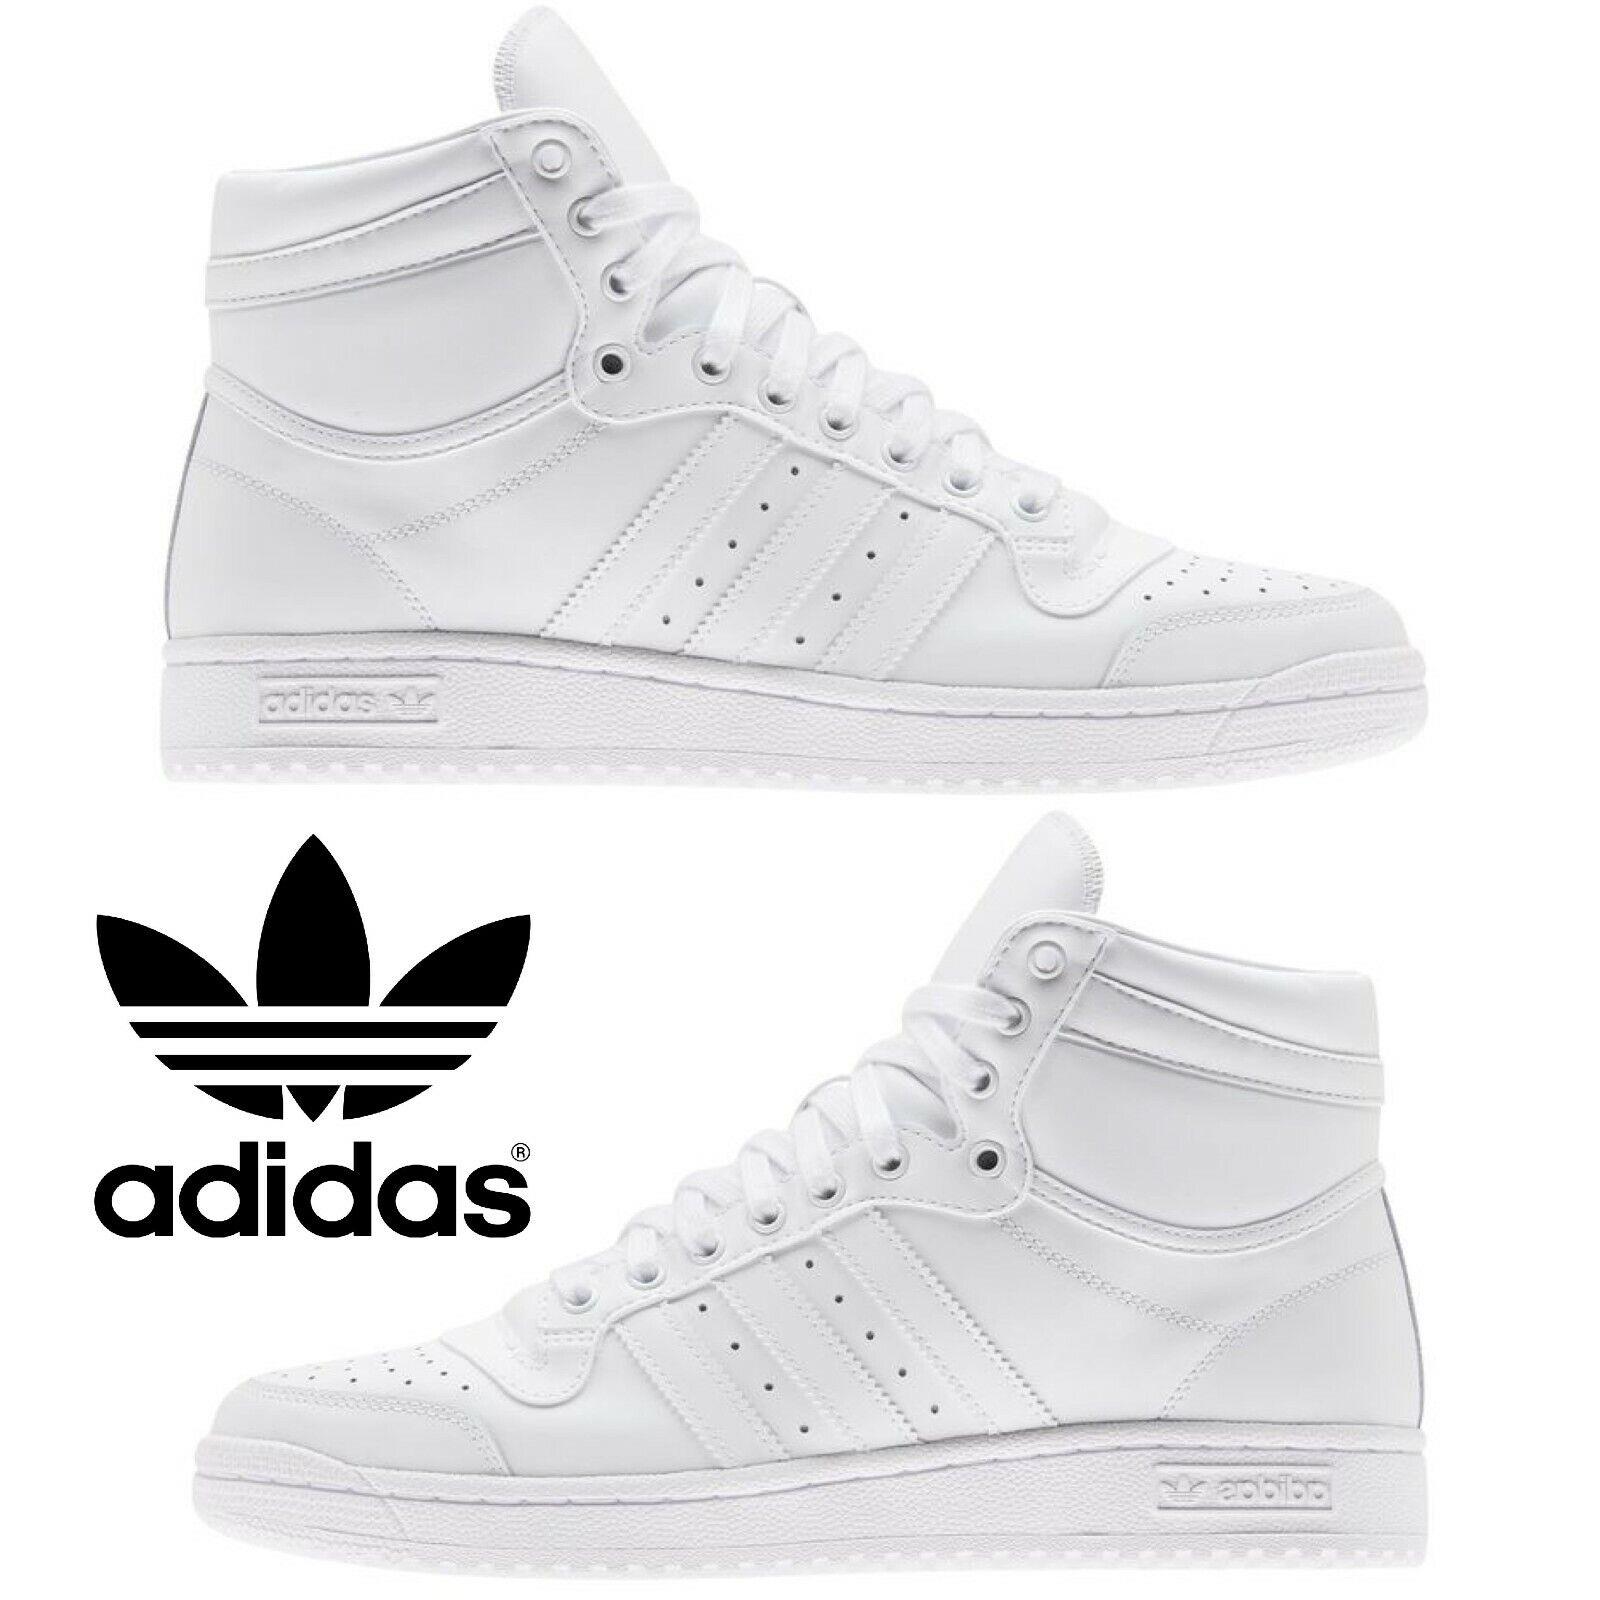 Adidas Originals Top Ten Hi Men`s Sneakers Comfort Casual Shoes White